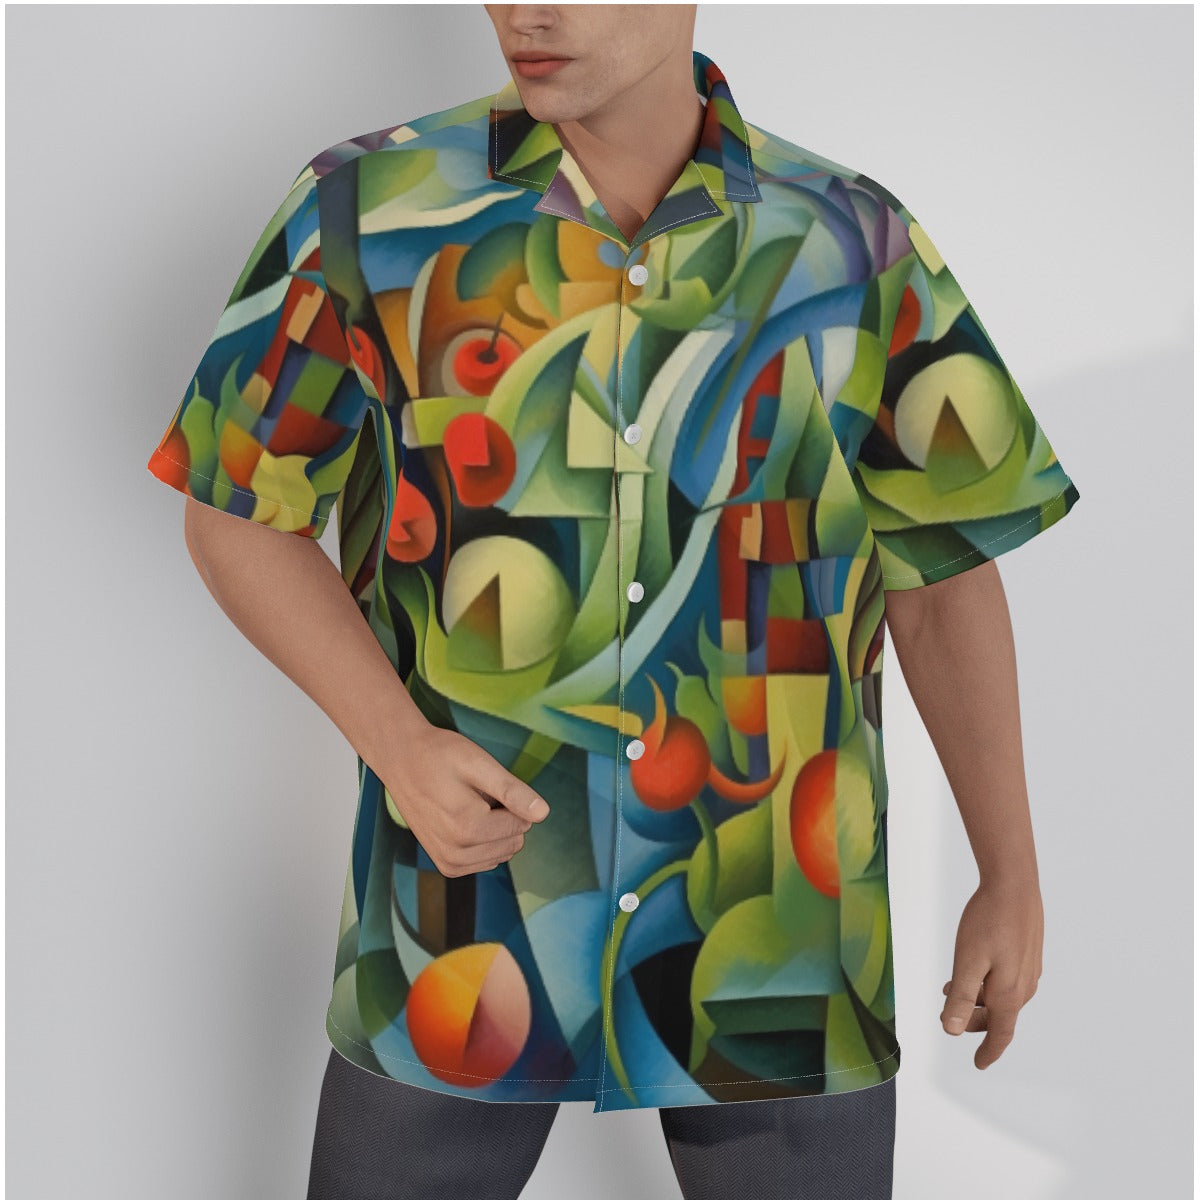 3QYNL All-Over Print Men's Hawaiian Shirt With Button Closure |115GSM Cotton poplin